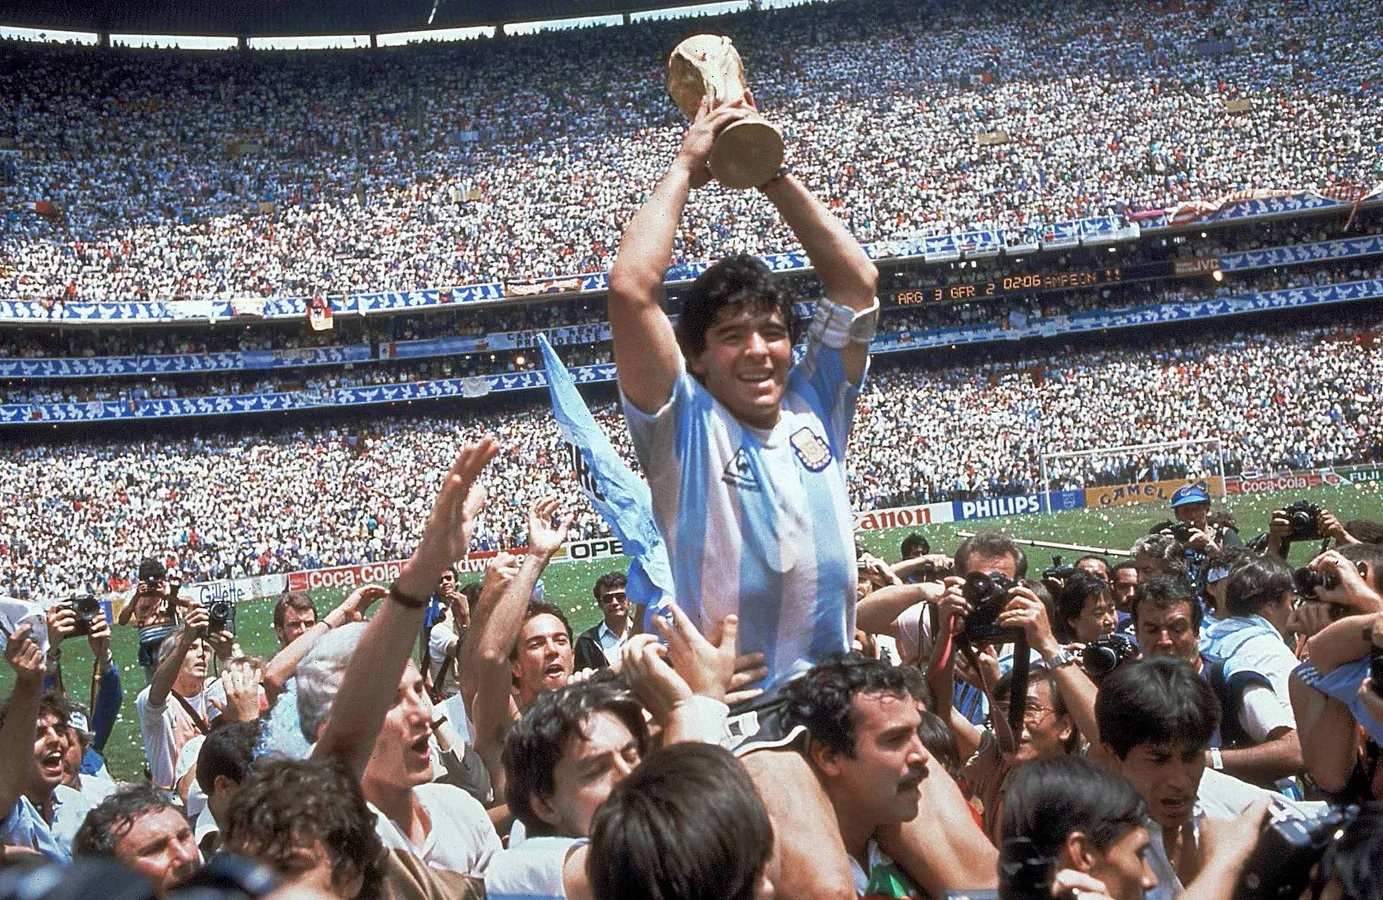 Diego Maradona merayakan kemenangan di akhir final sepak bola Piala Dunia di Stadion Azteca, di Mexico City, Meksiko. Foto: AP Photo / Carlo Fumagalli.